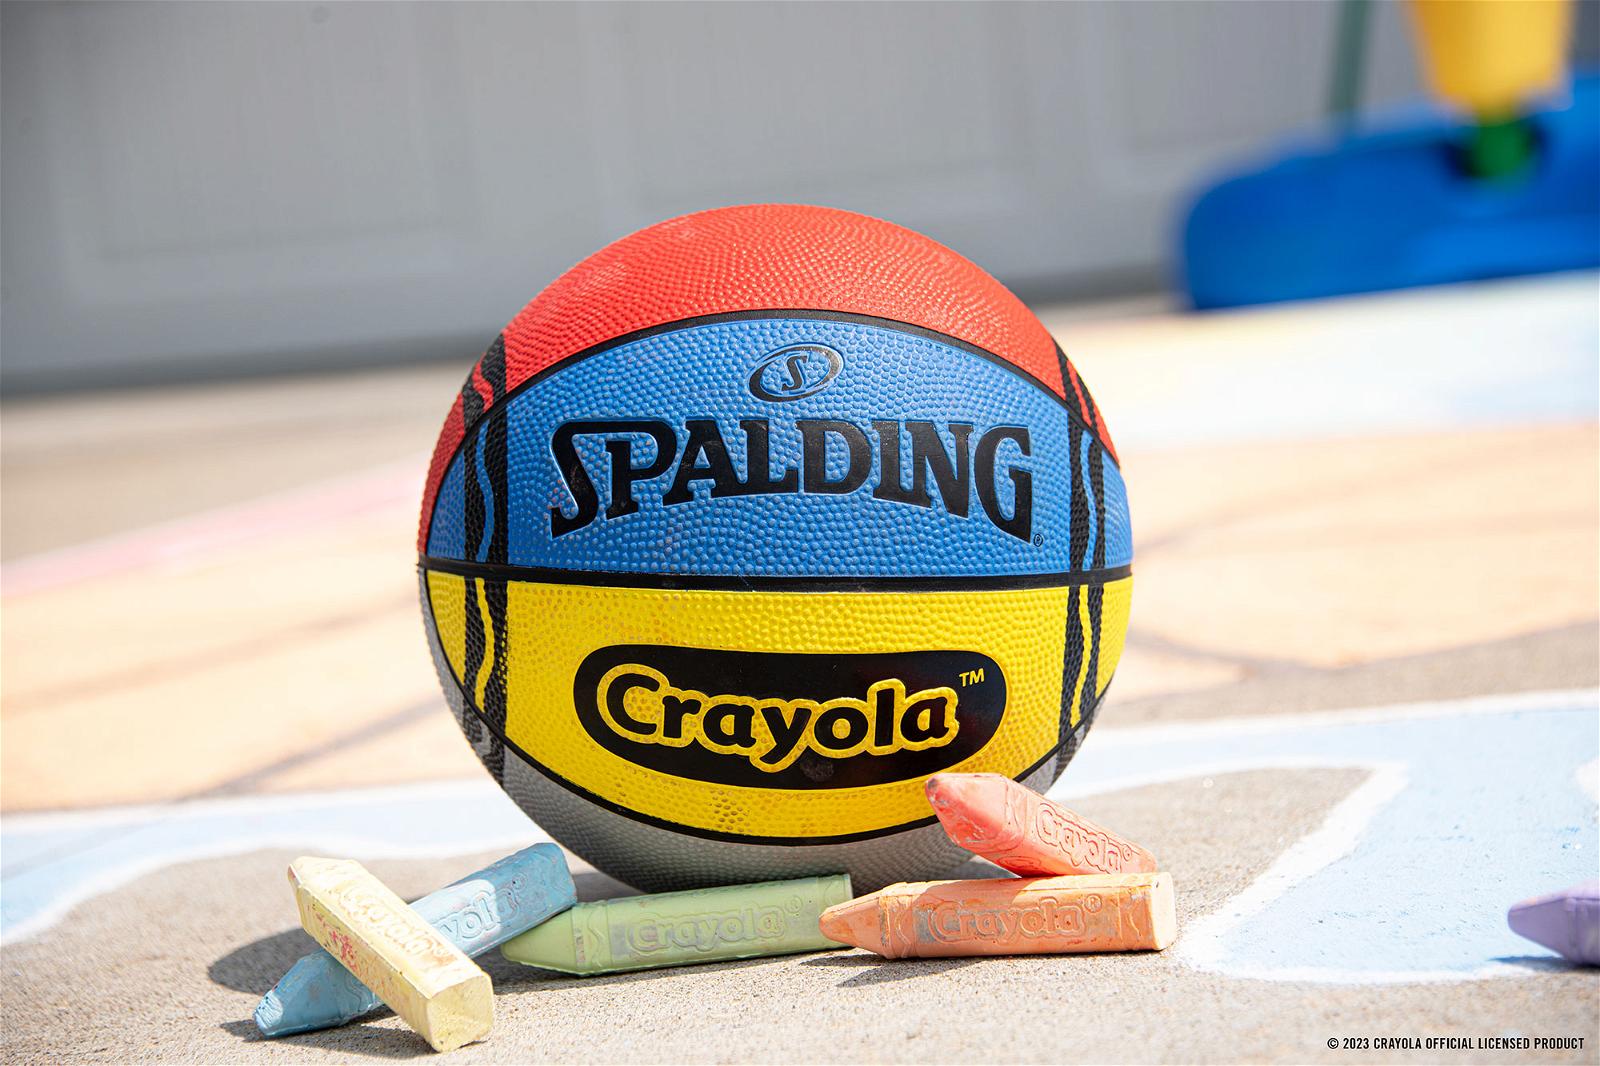 Spalding x Crayola collection